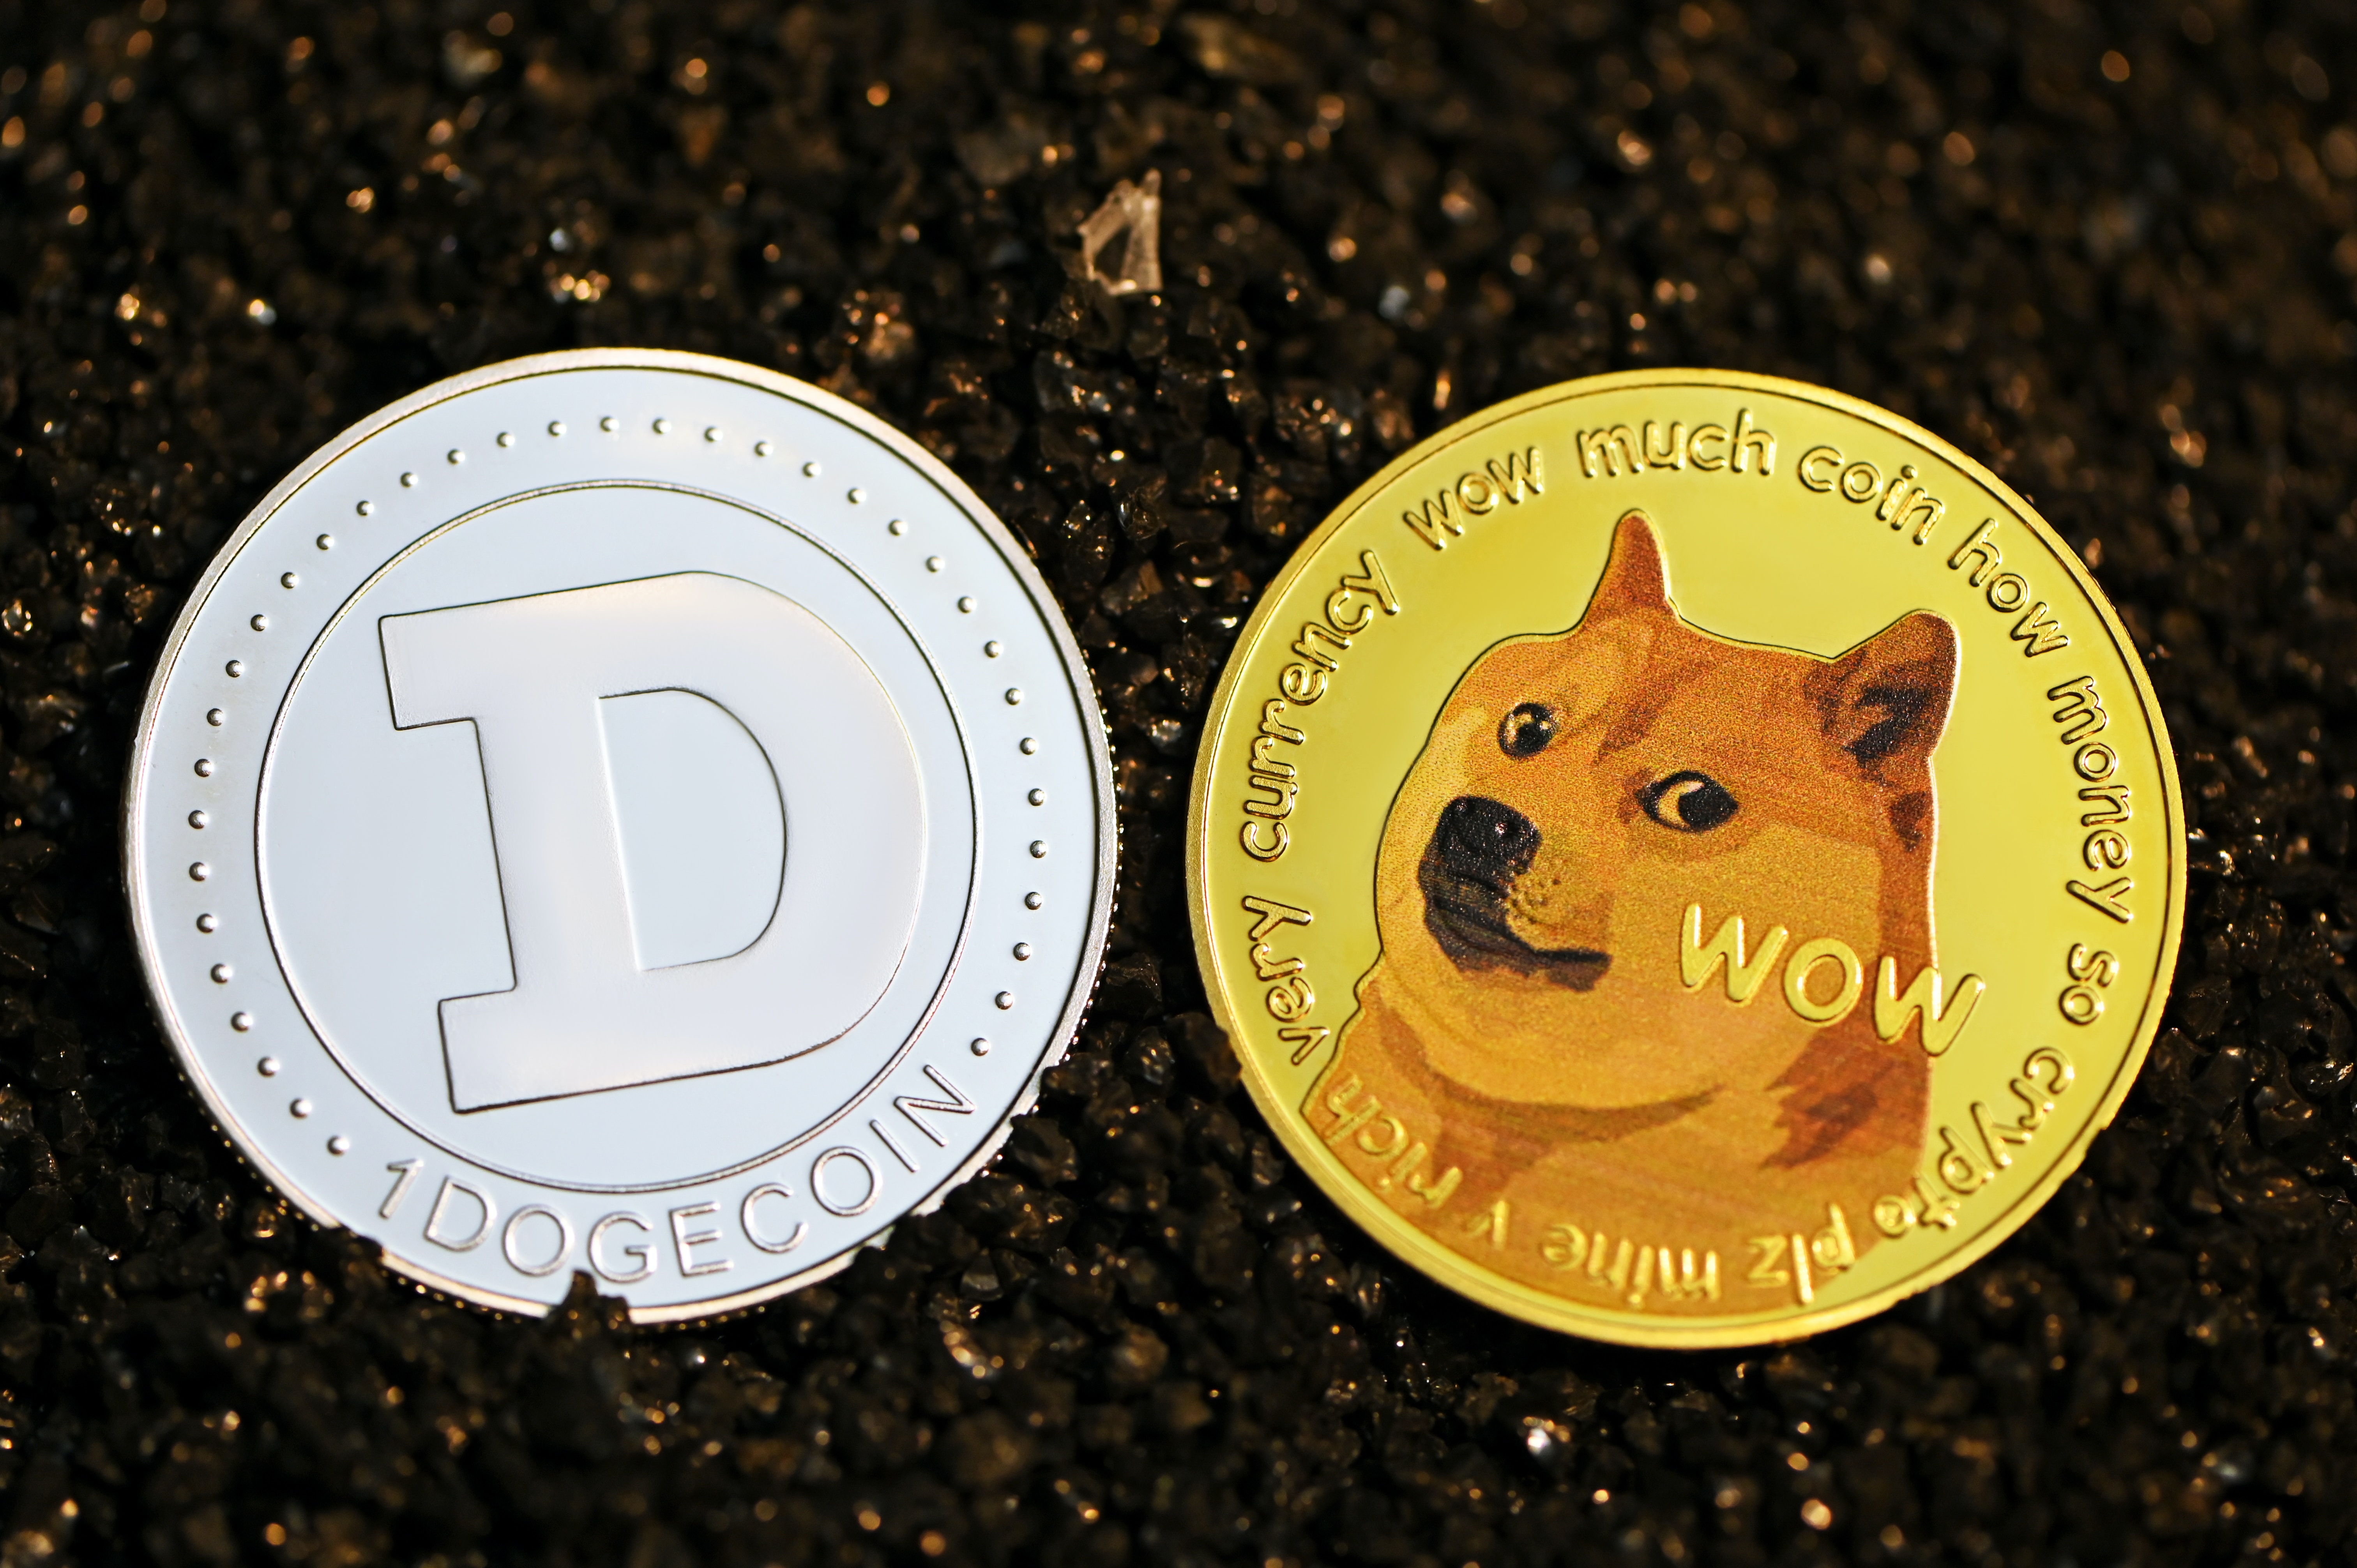 Dogecoin physical coin